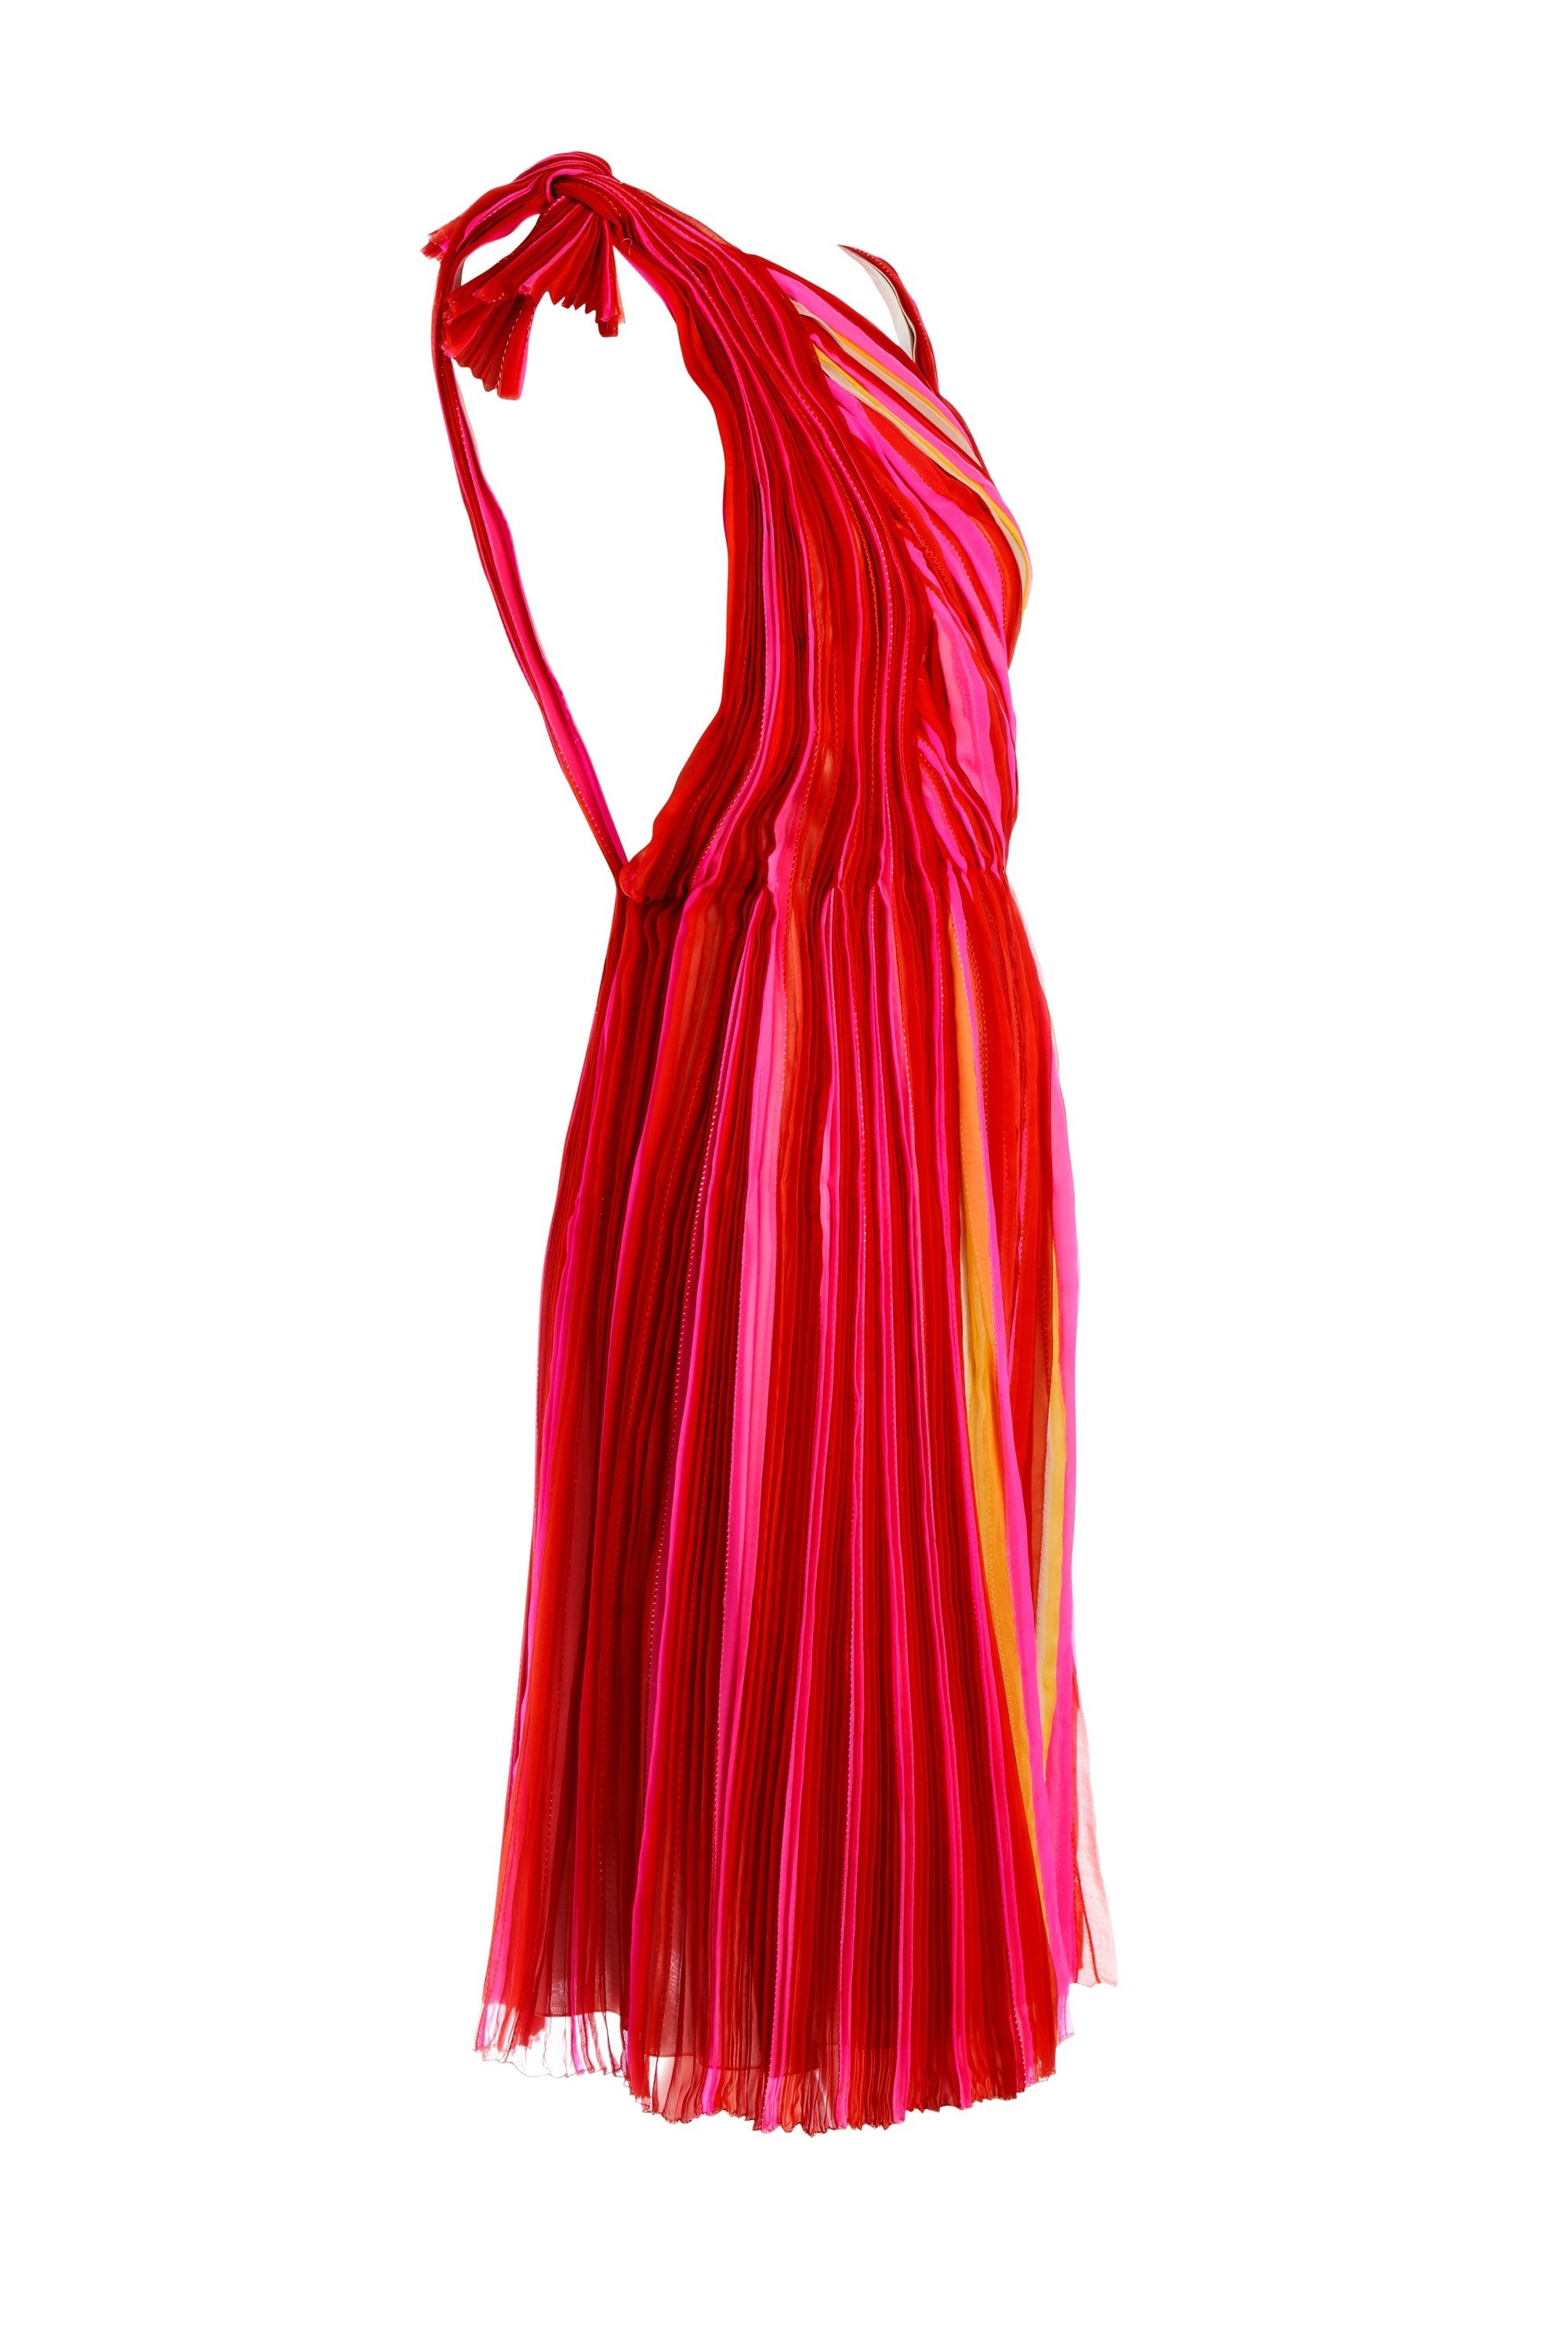 Bottega Veneta Pleated Red Dress - Foxy Couture Carmel